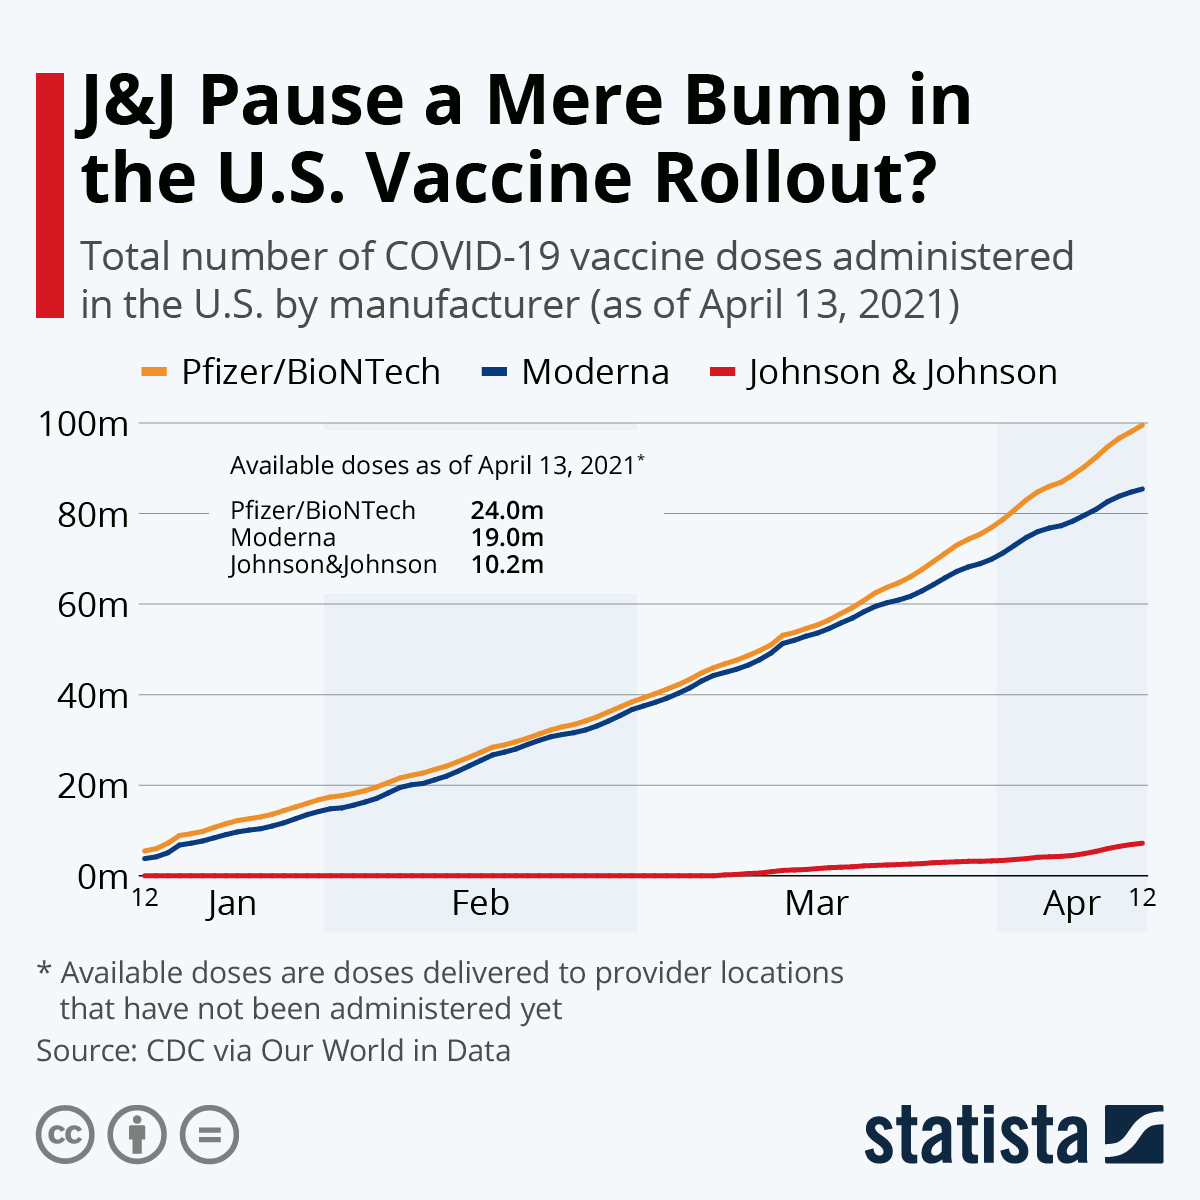 J&J Pause a Mere Bump in the U.S. Vaccine Rollout